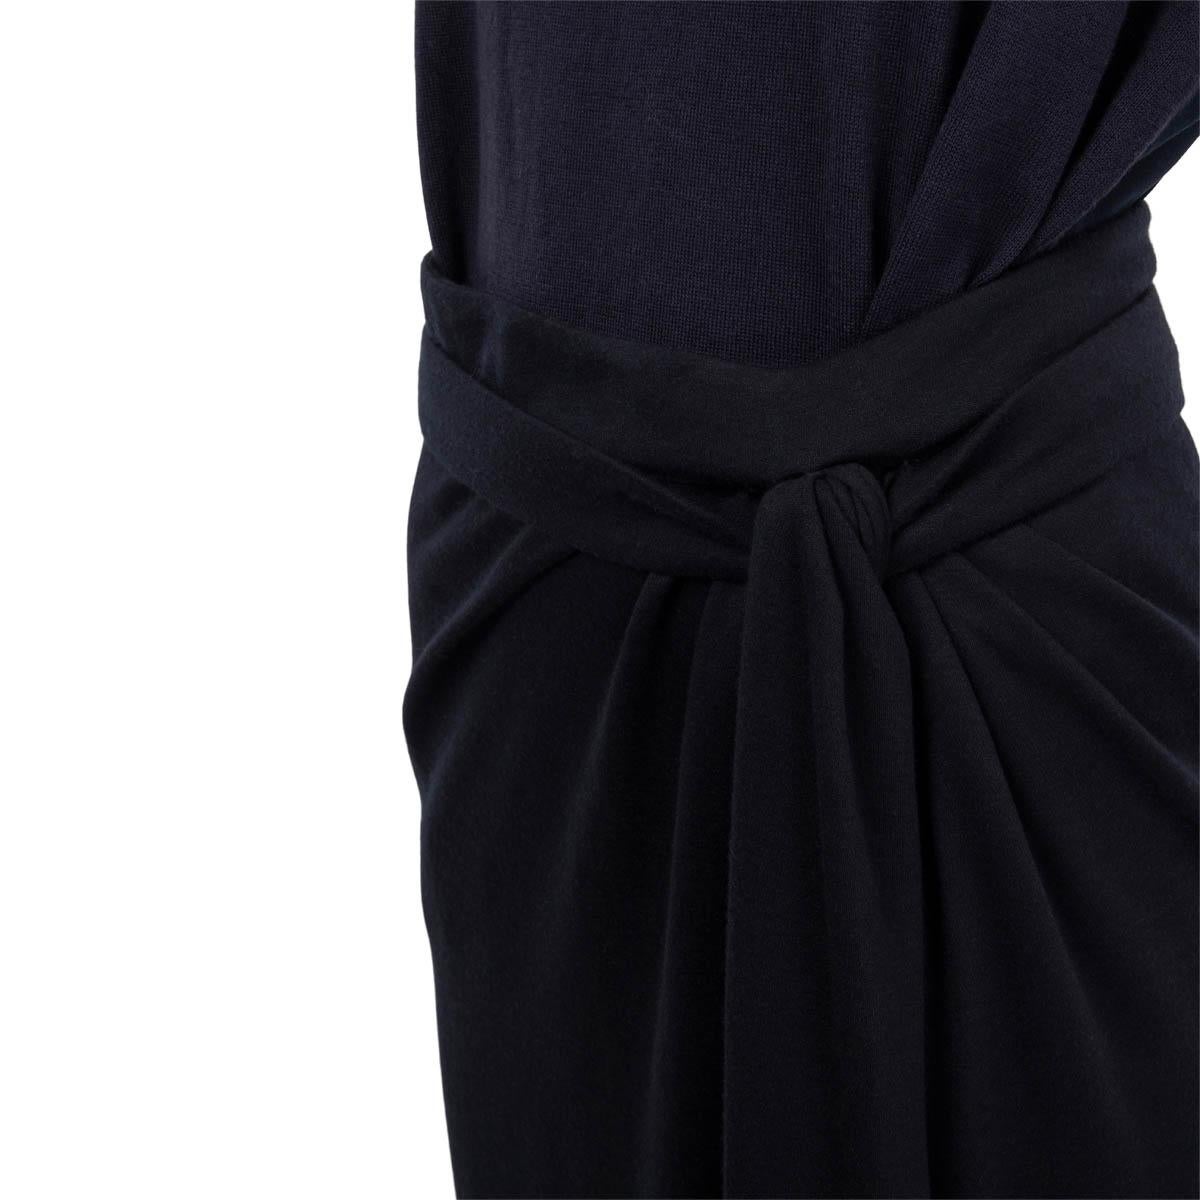 JIL SANDER black cashmere blend Maxi Skirt 36 S In Excellent Condition For Sale In Zürich, CH